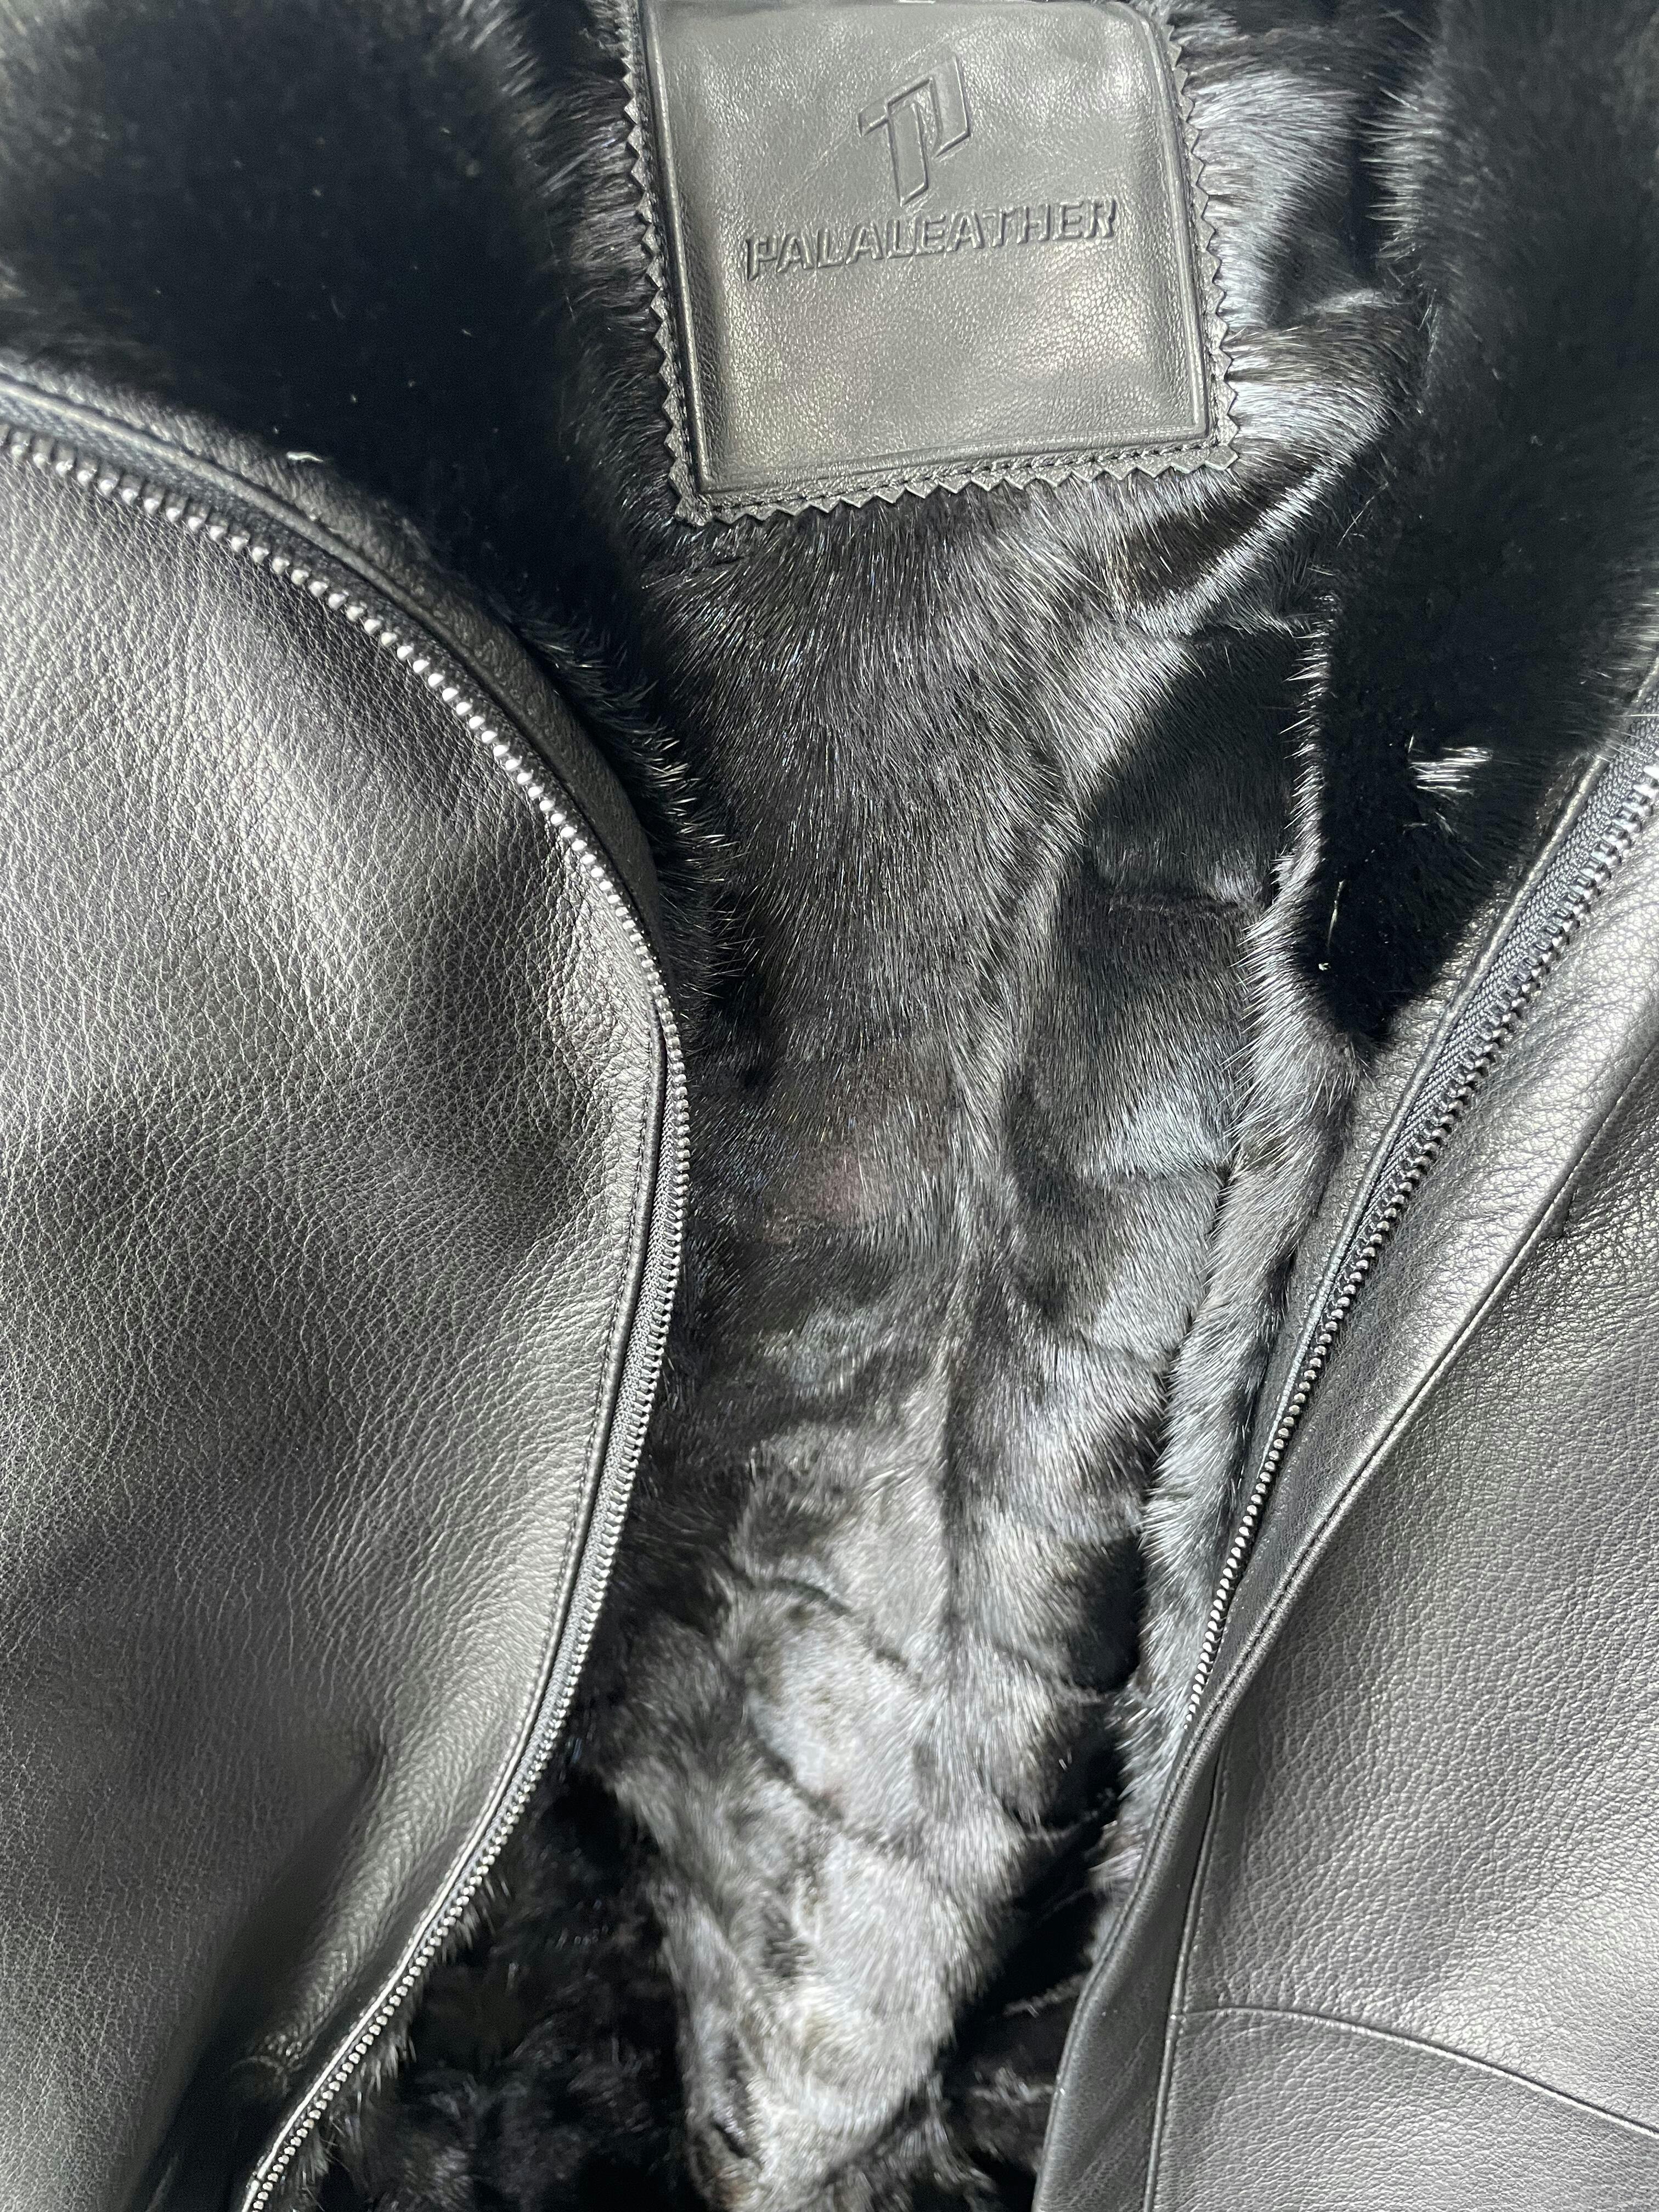 Palaleather Black Genuine Goatskin Leather Trench Coat Jacket with Fur Lining Winter Leather Jacket, Black / Mink Fur Collar + Down / Custom Size